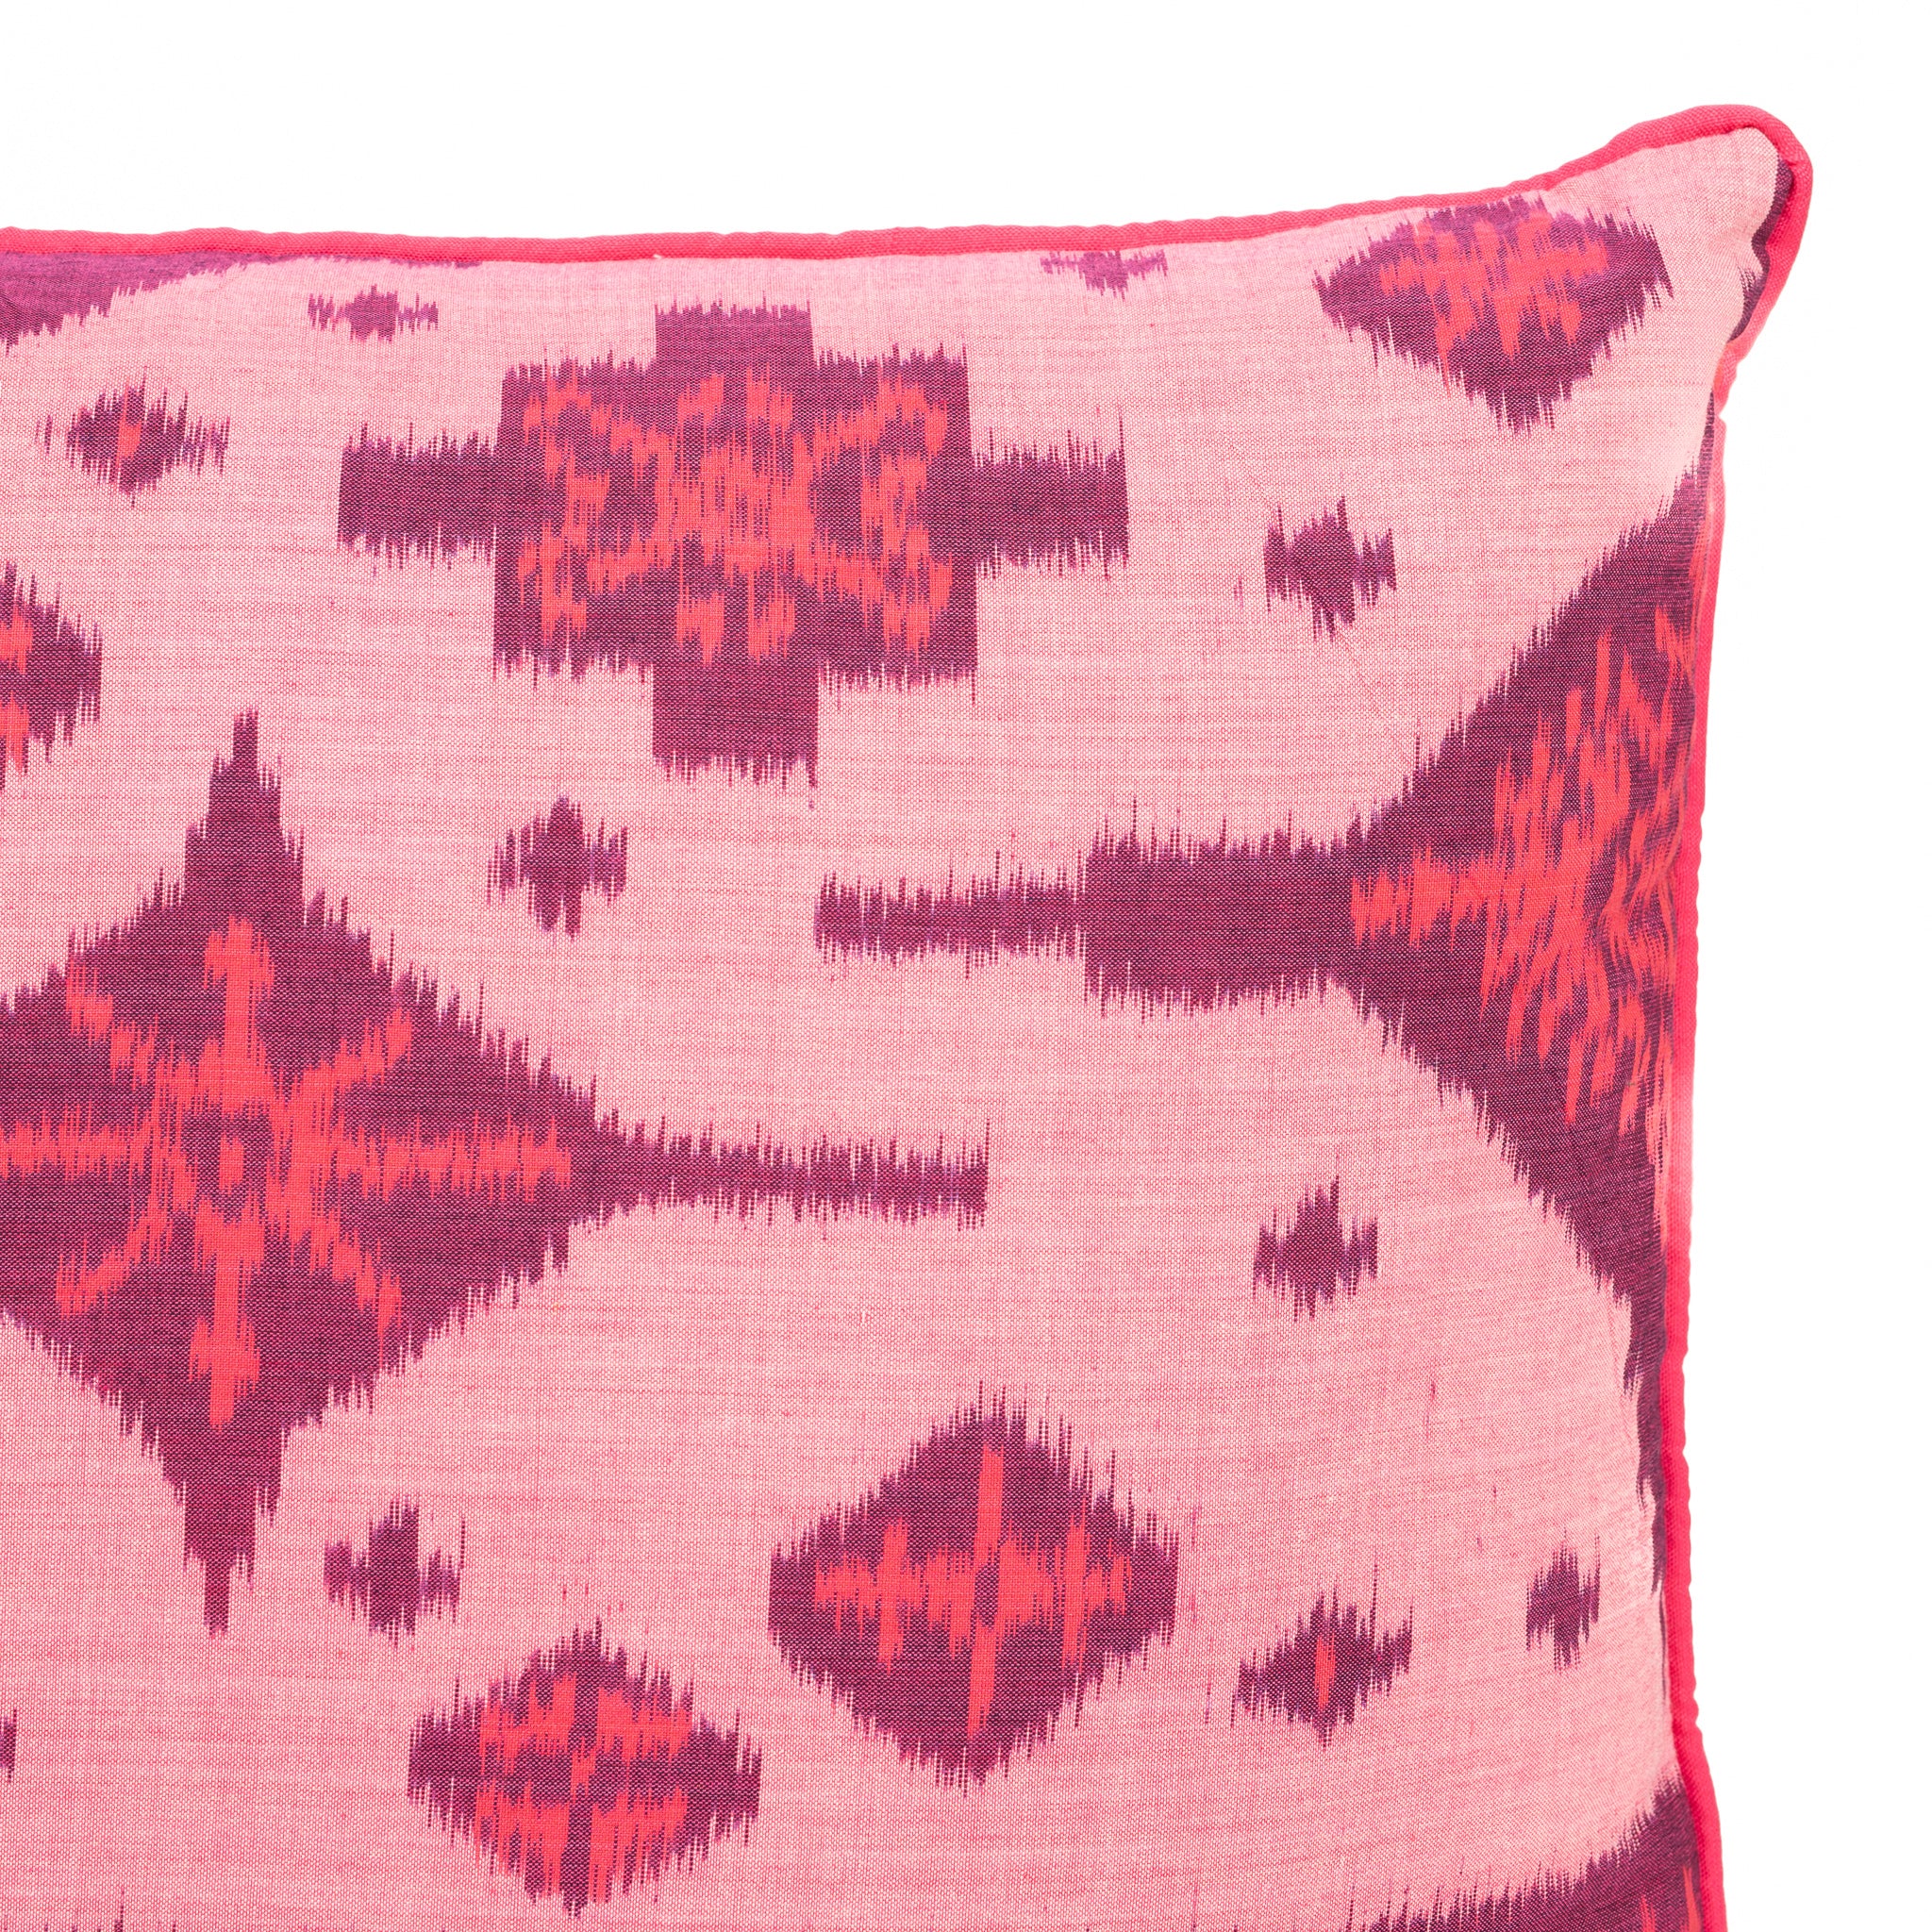 Luxury cushion/Scatter cushion/Designer cushion/Pink/Fuchsia/Pale pink/Ikat cushions/Bali/Indonesia